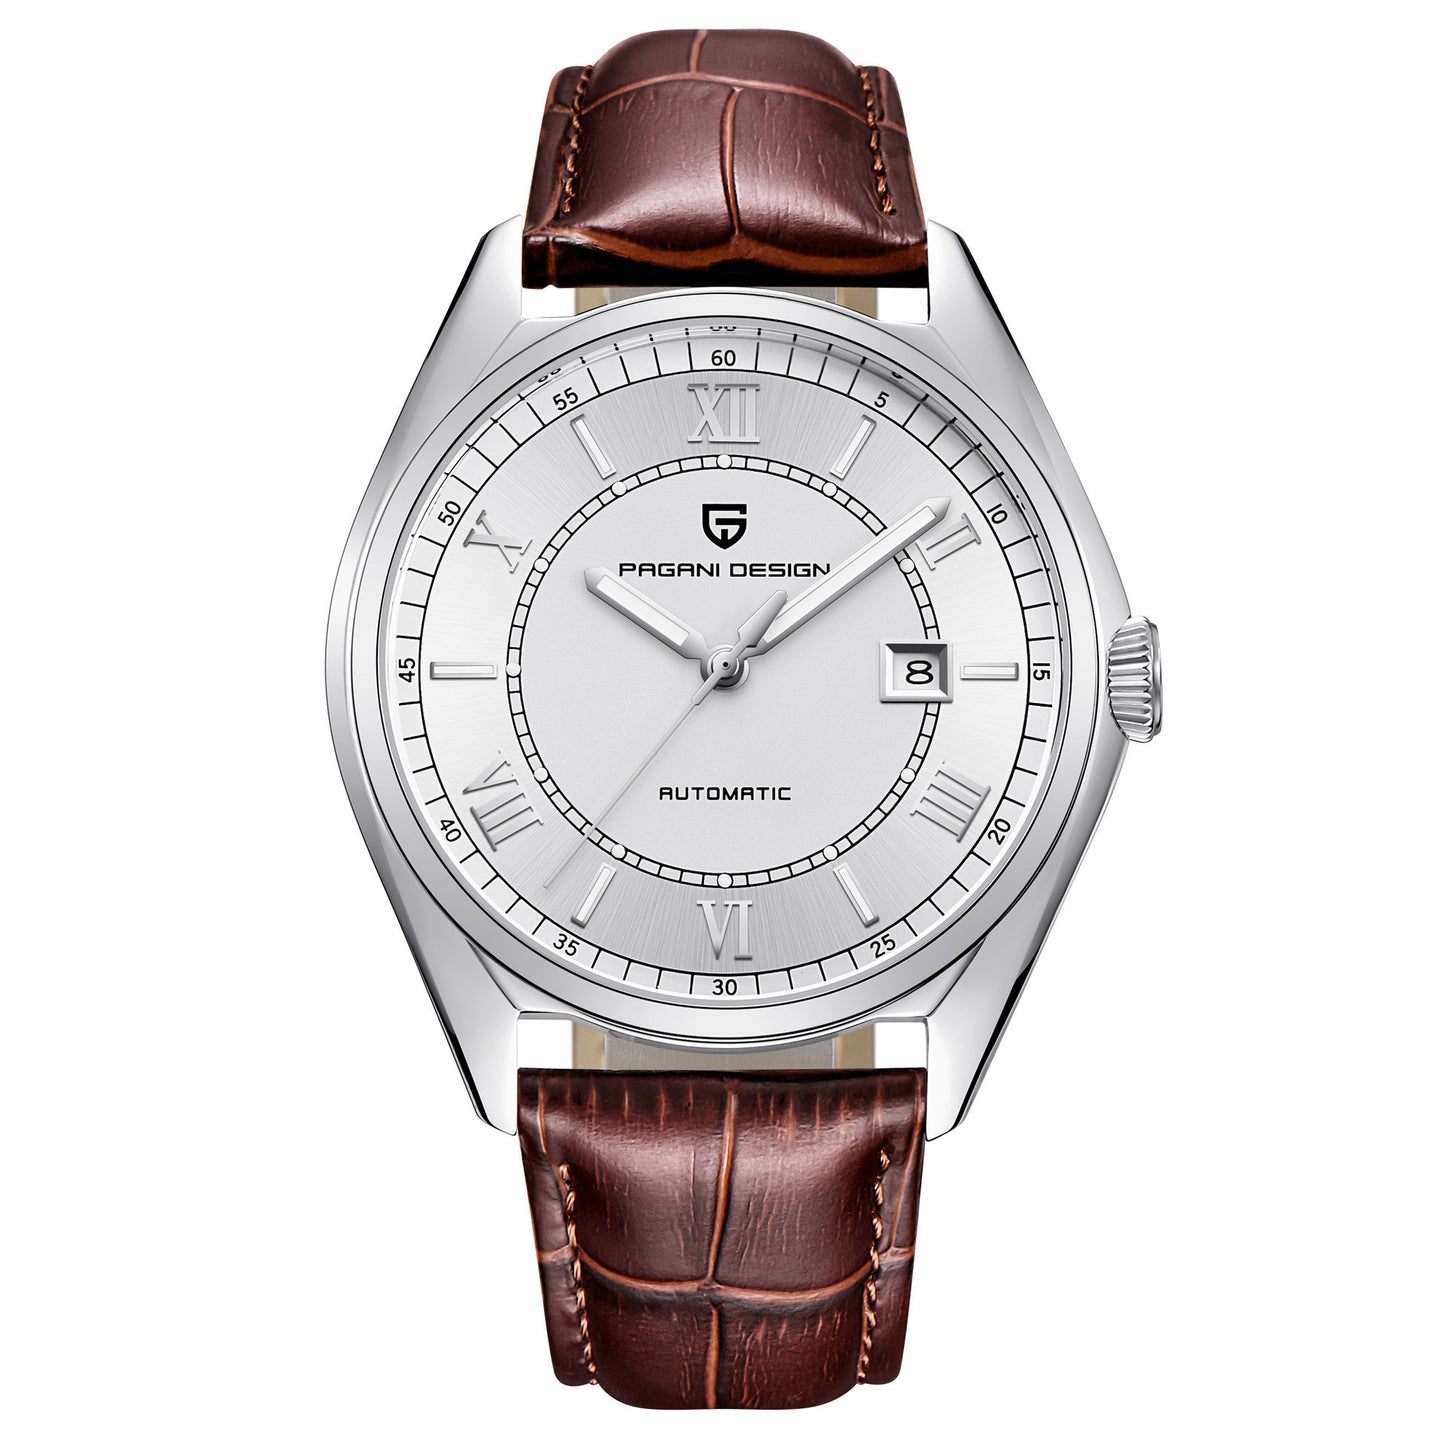 Bergani men's automatic mechanical watch